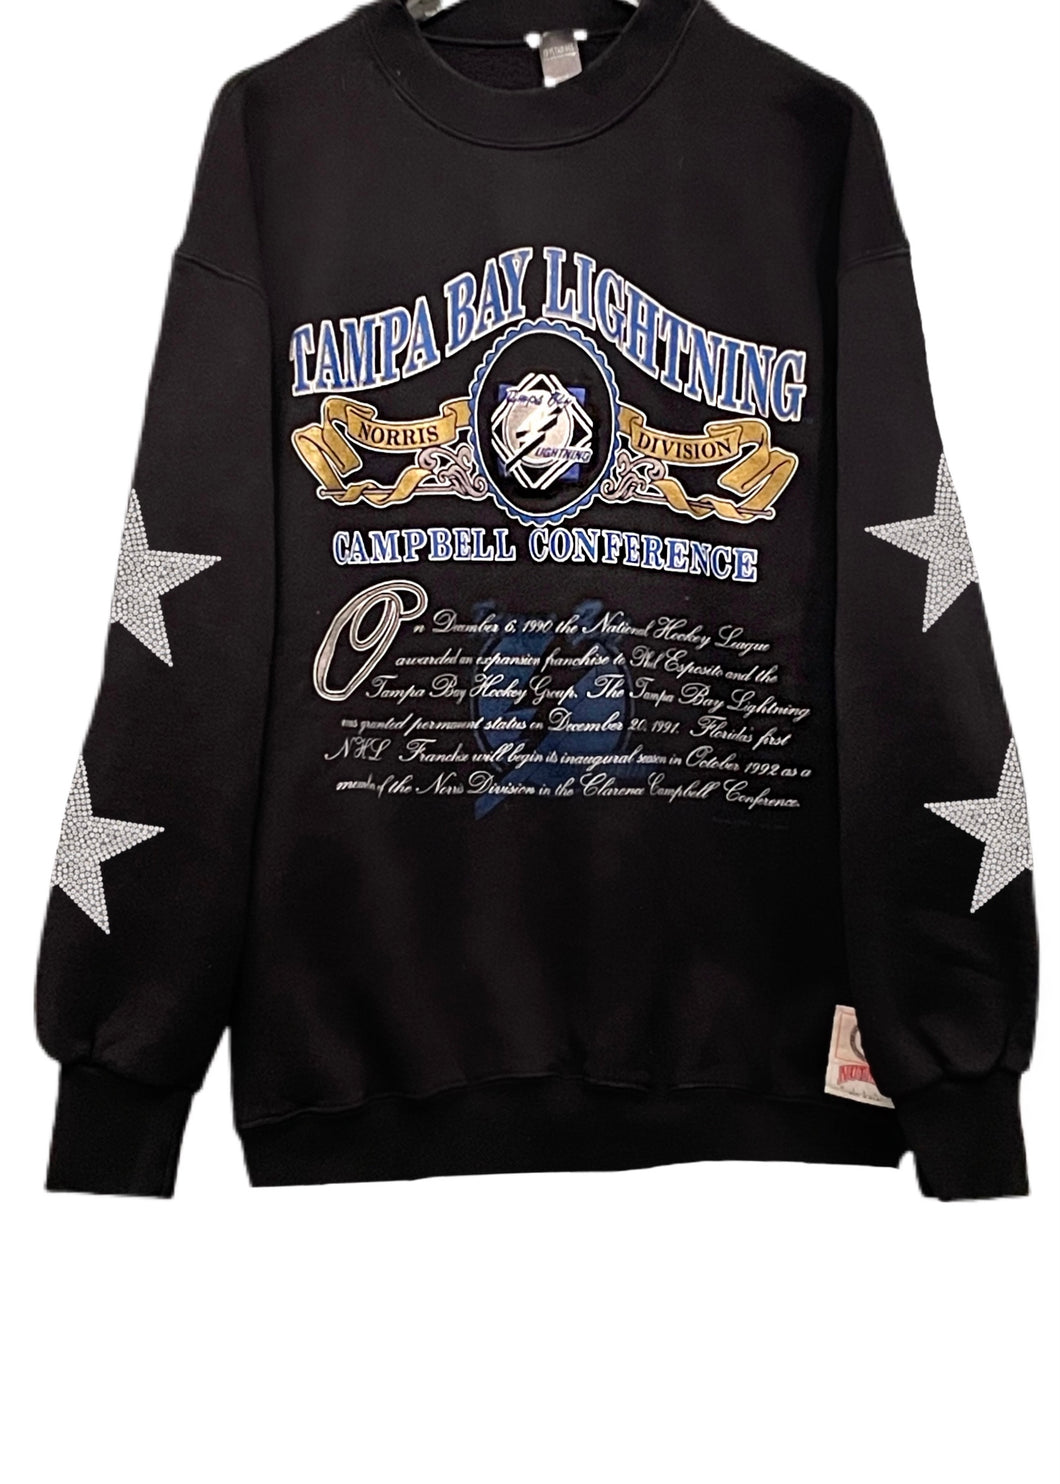 Tampa Bay Lightning, NHL One of a KIND Vintage Sweatshirt with Crystal Star Design